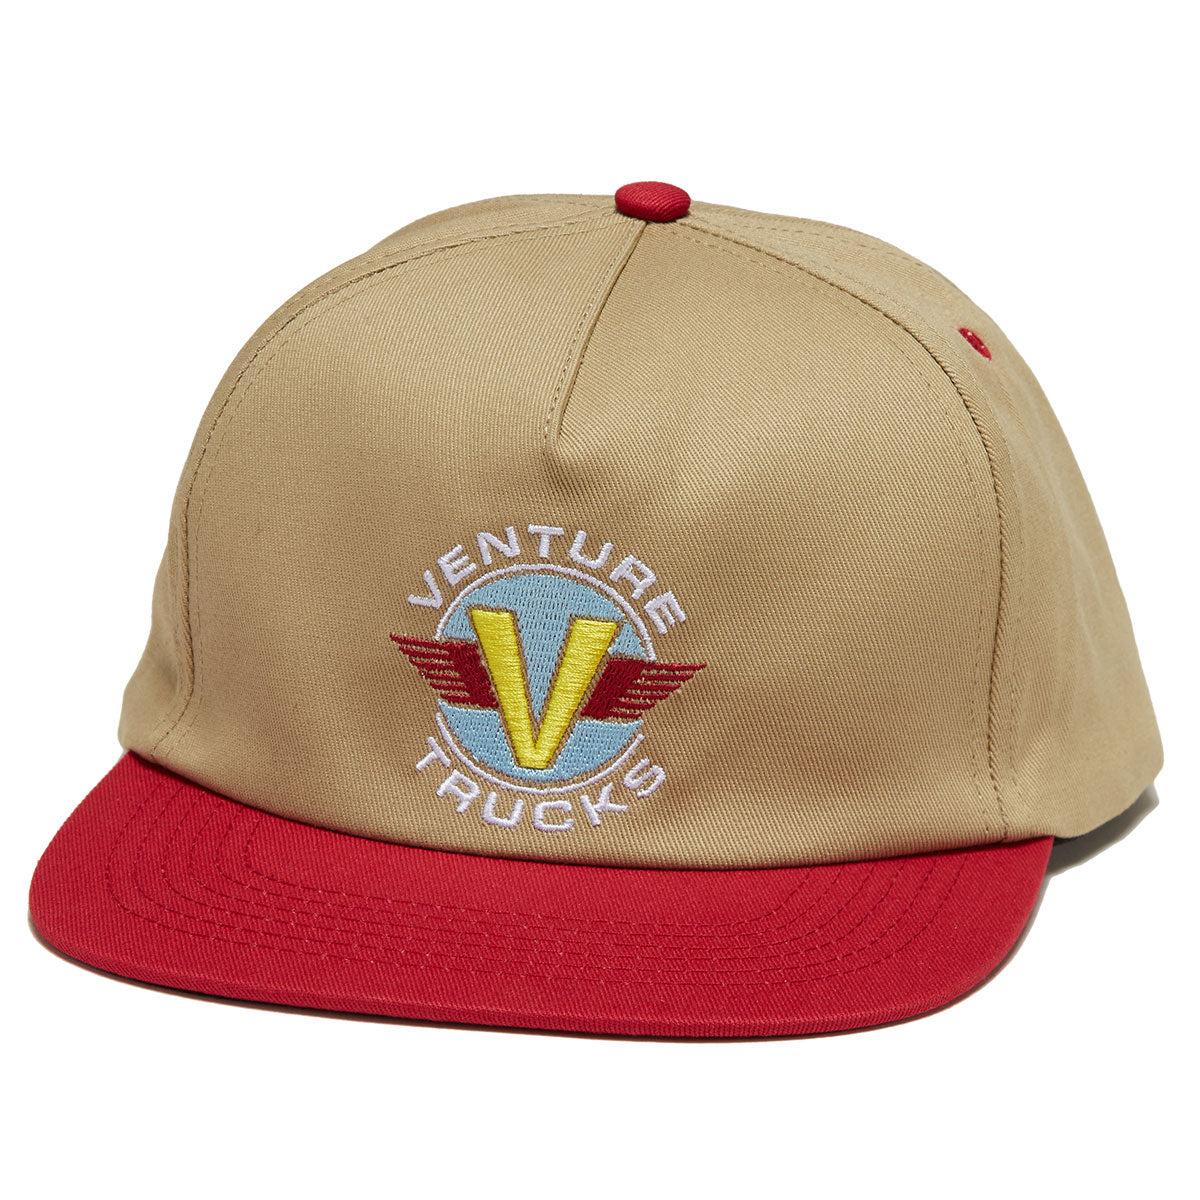 Venture Wings Hat - Tan/Red image 1